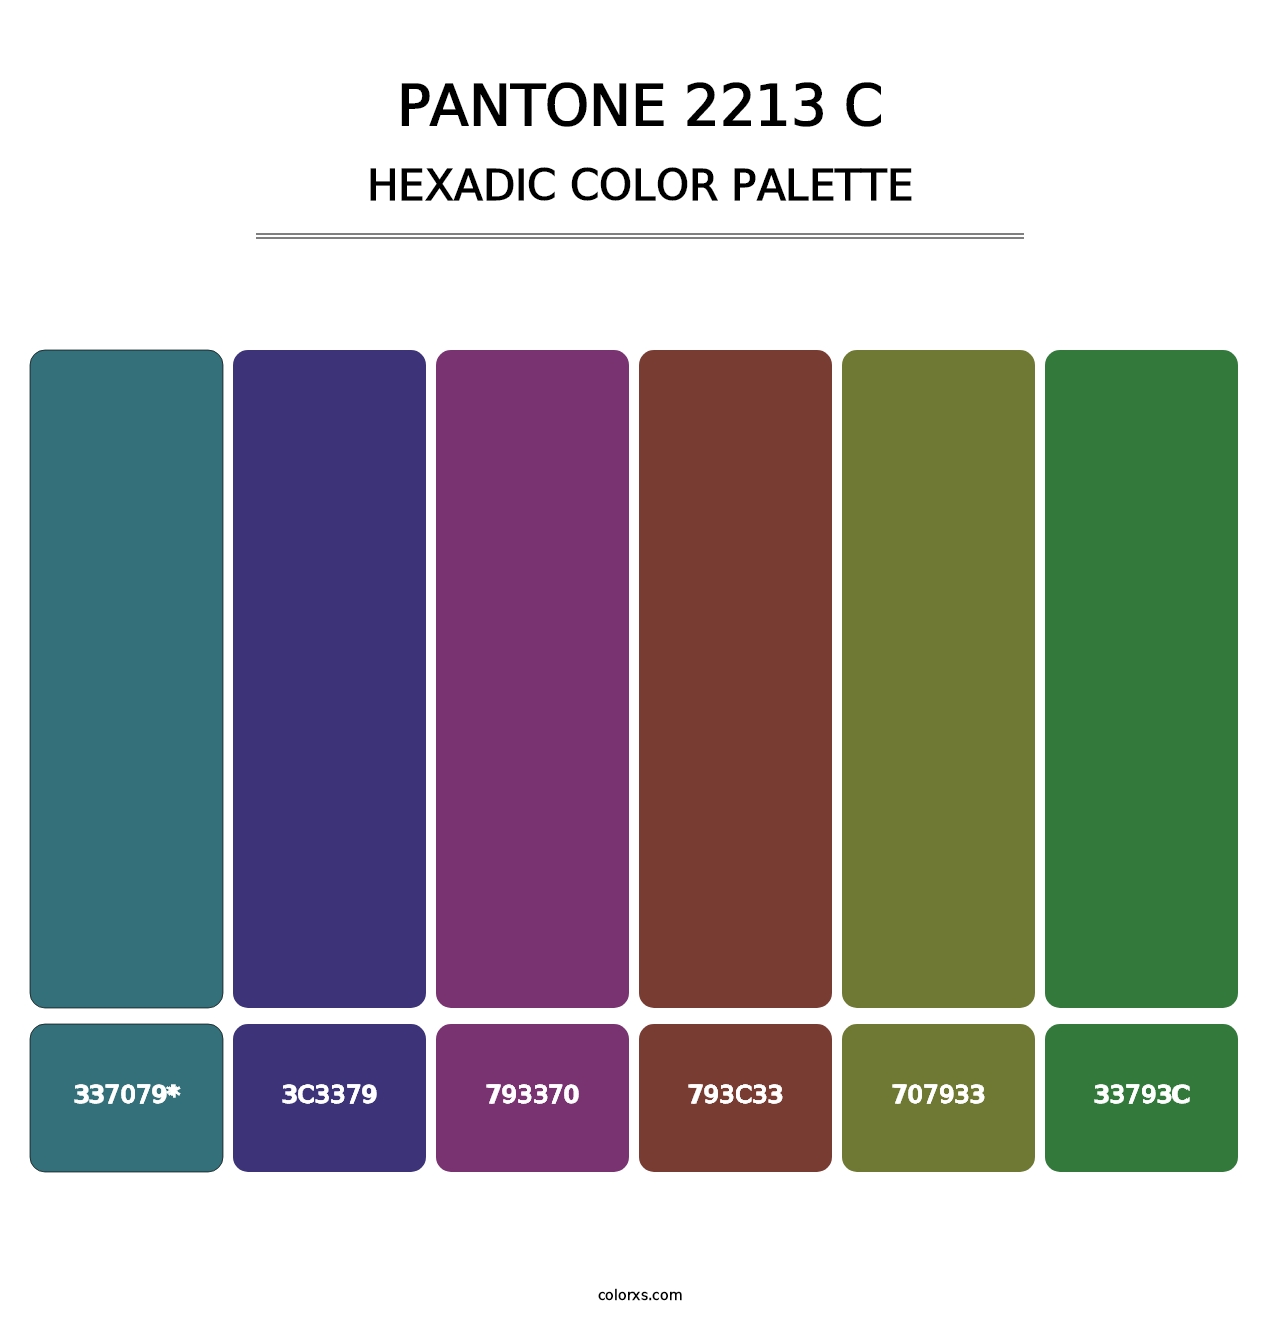 PANTONE 2213 C - Hexadic Color Palette